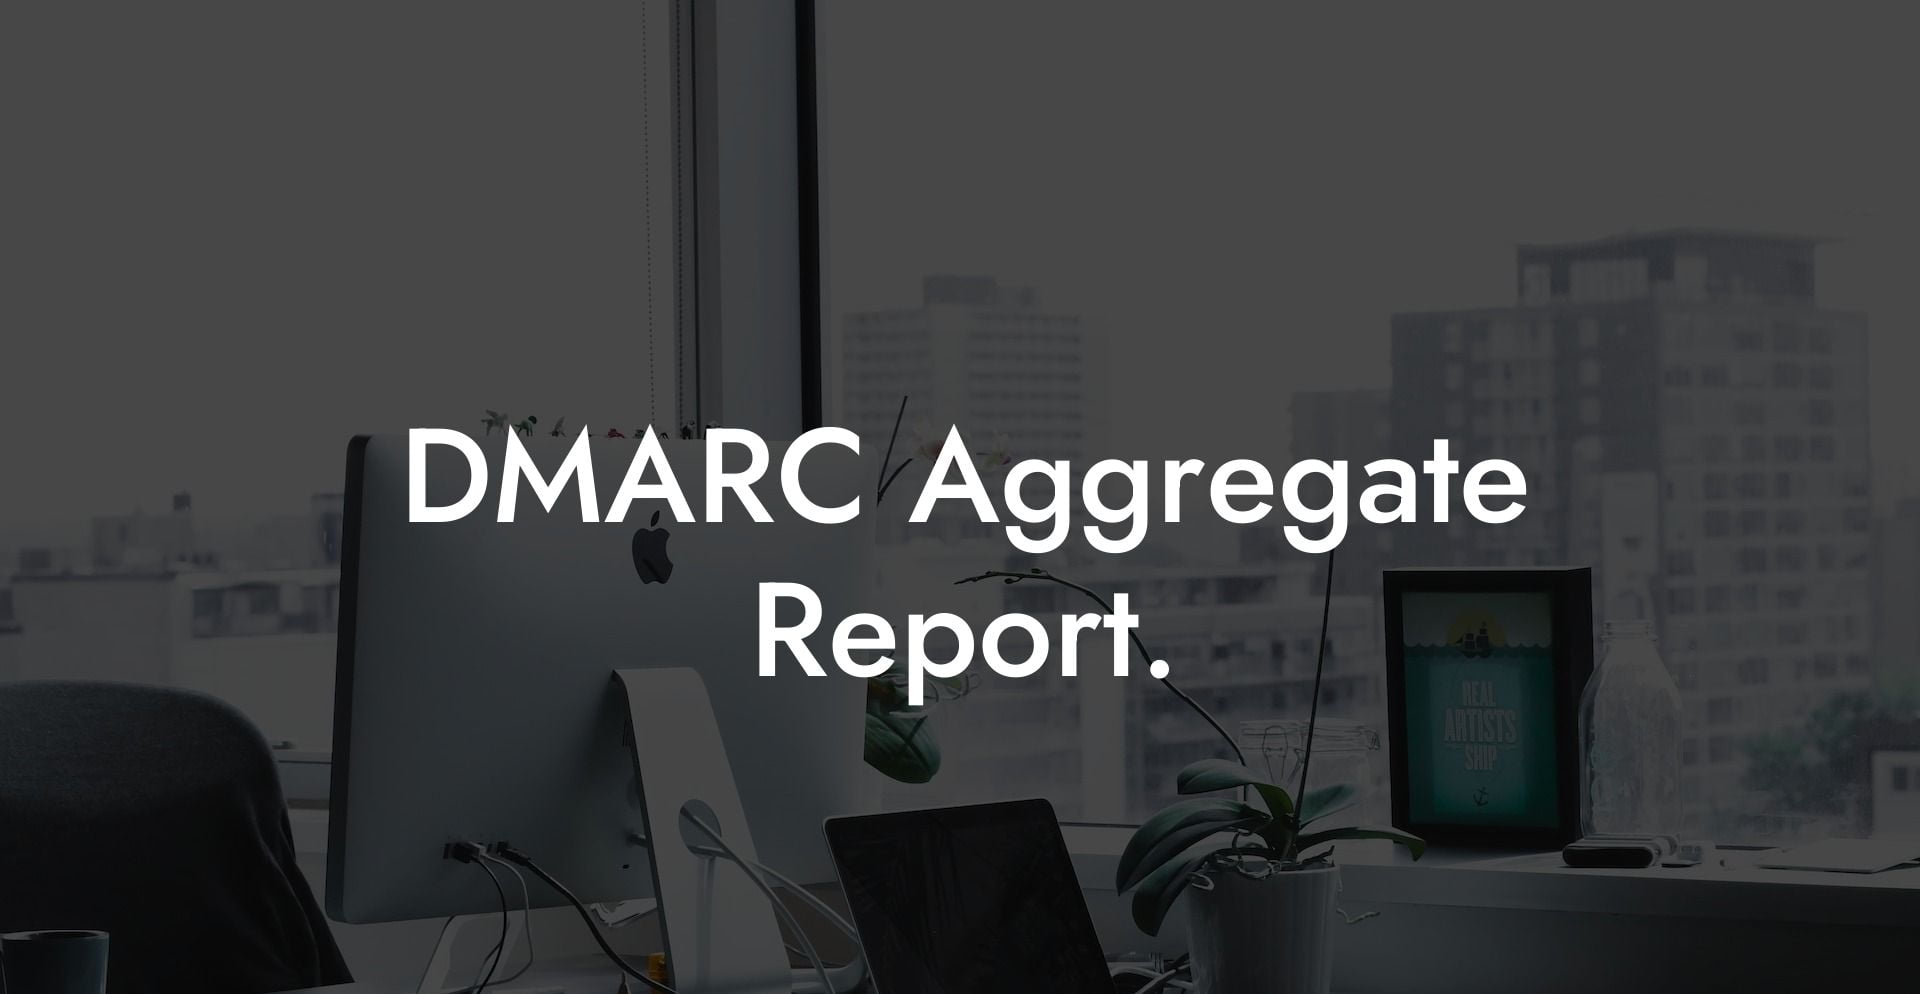 DMARC Aggregate Report